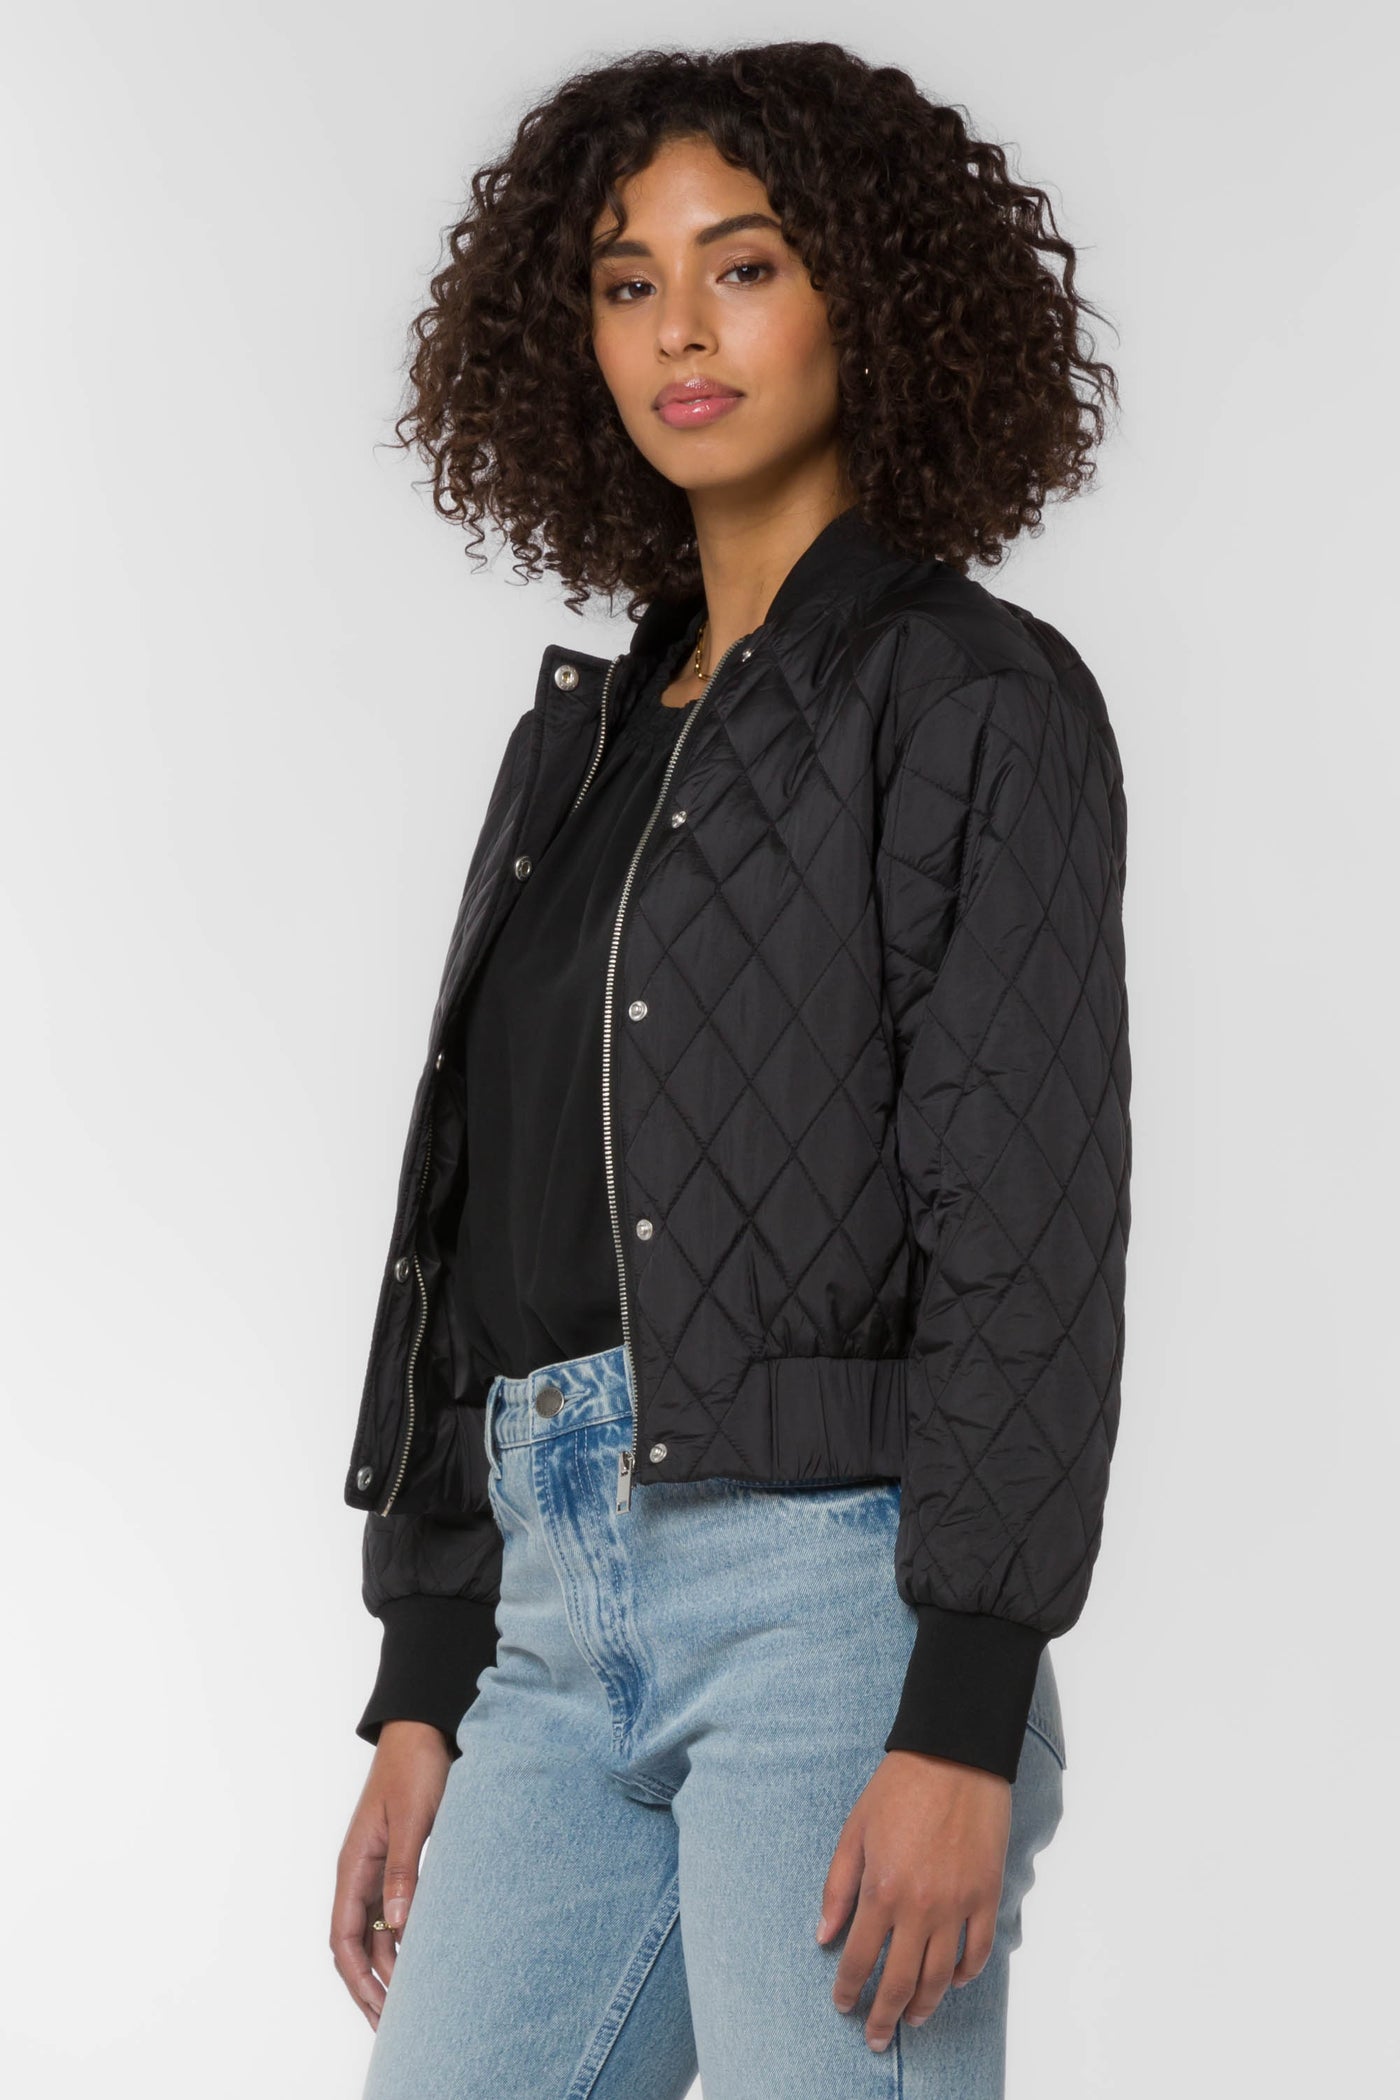 Sakura Black Jacket - Jackets & Outerwear - Velvet Heart Clothing